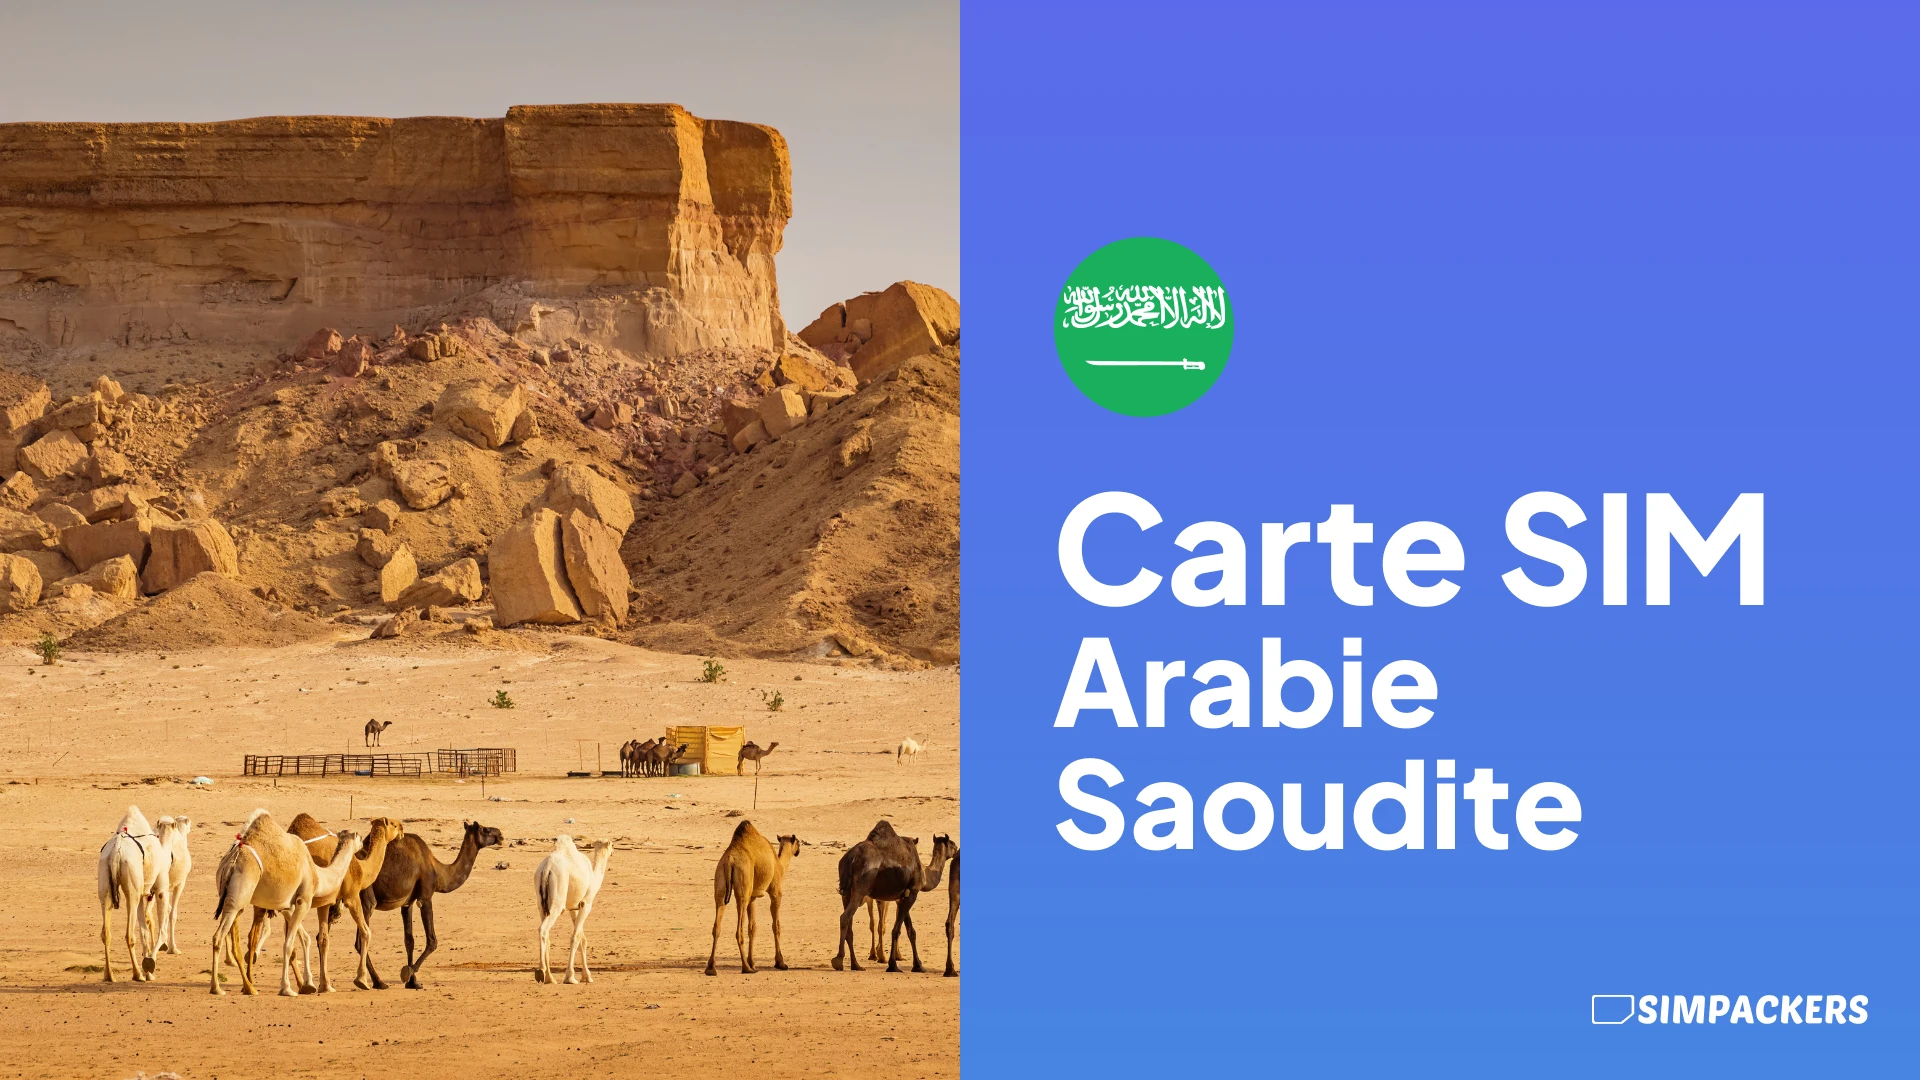 FR/FEATURED_IMAGES/carte-sim-arabie-saoudite.webp